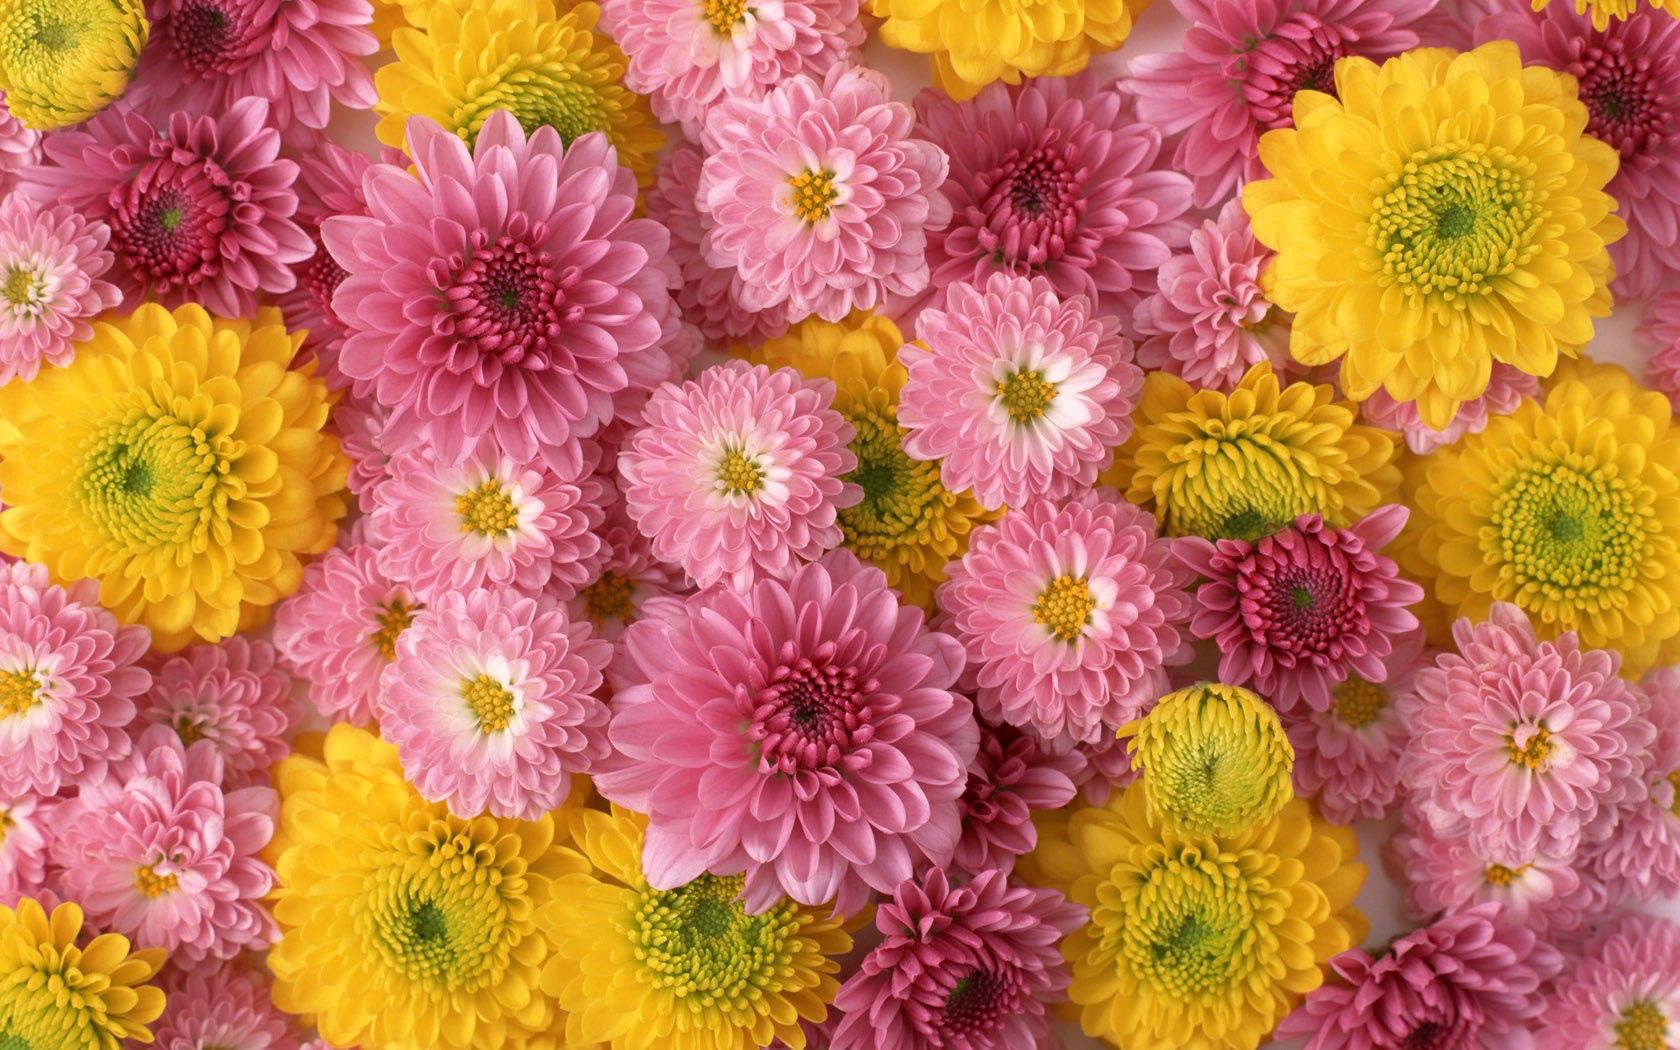 134593 descargar imagen flores, rosa, crisantemo, amarillo, rosado, cogollos, brotes, composición: fondos de pantalla y protectores de pantalla gratis